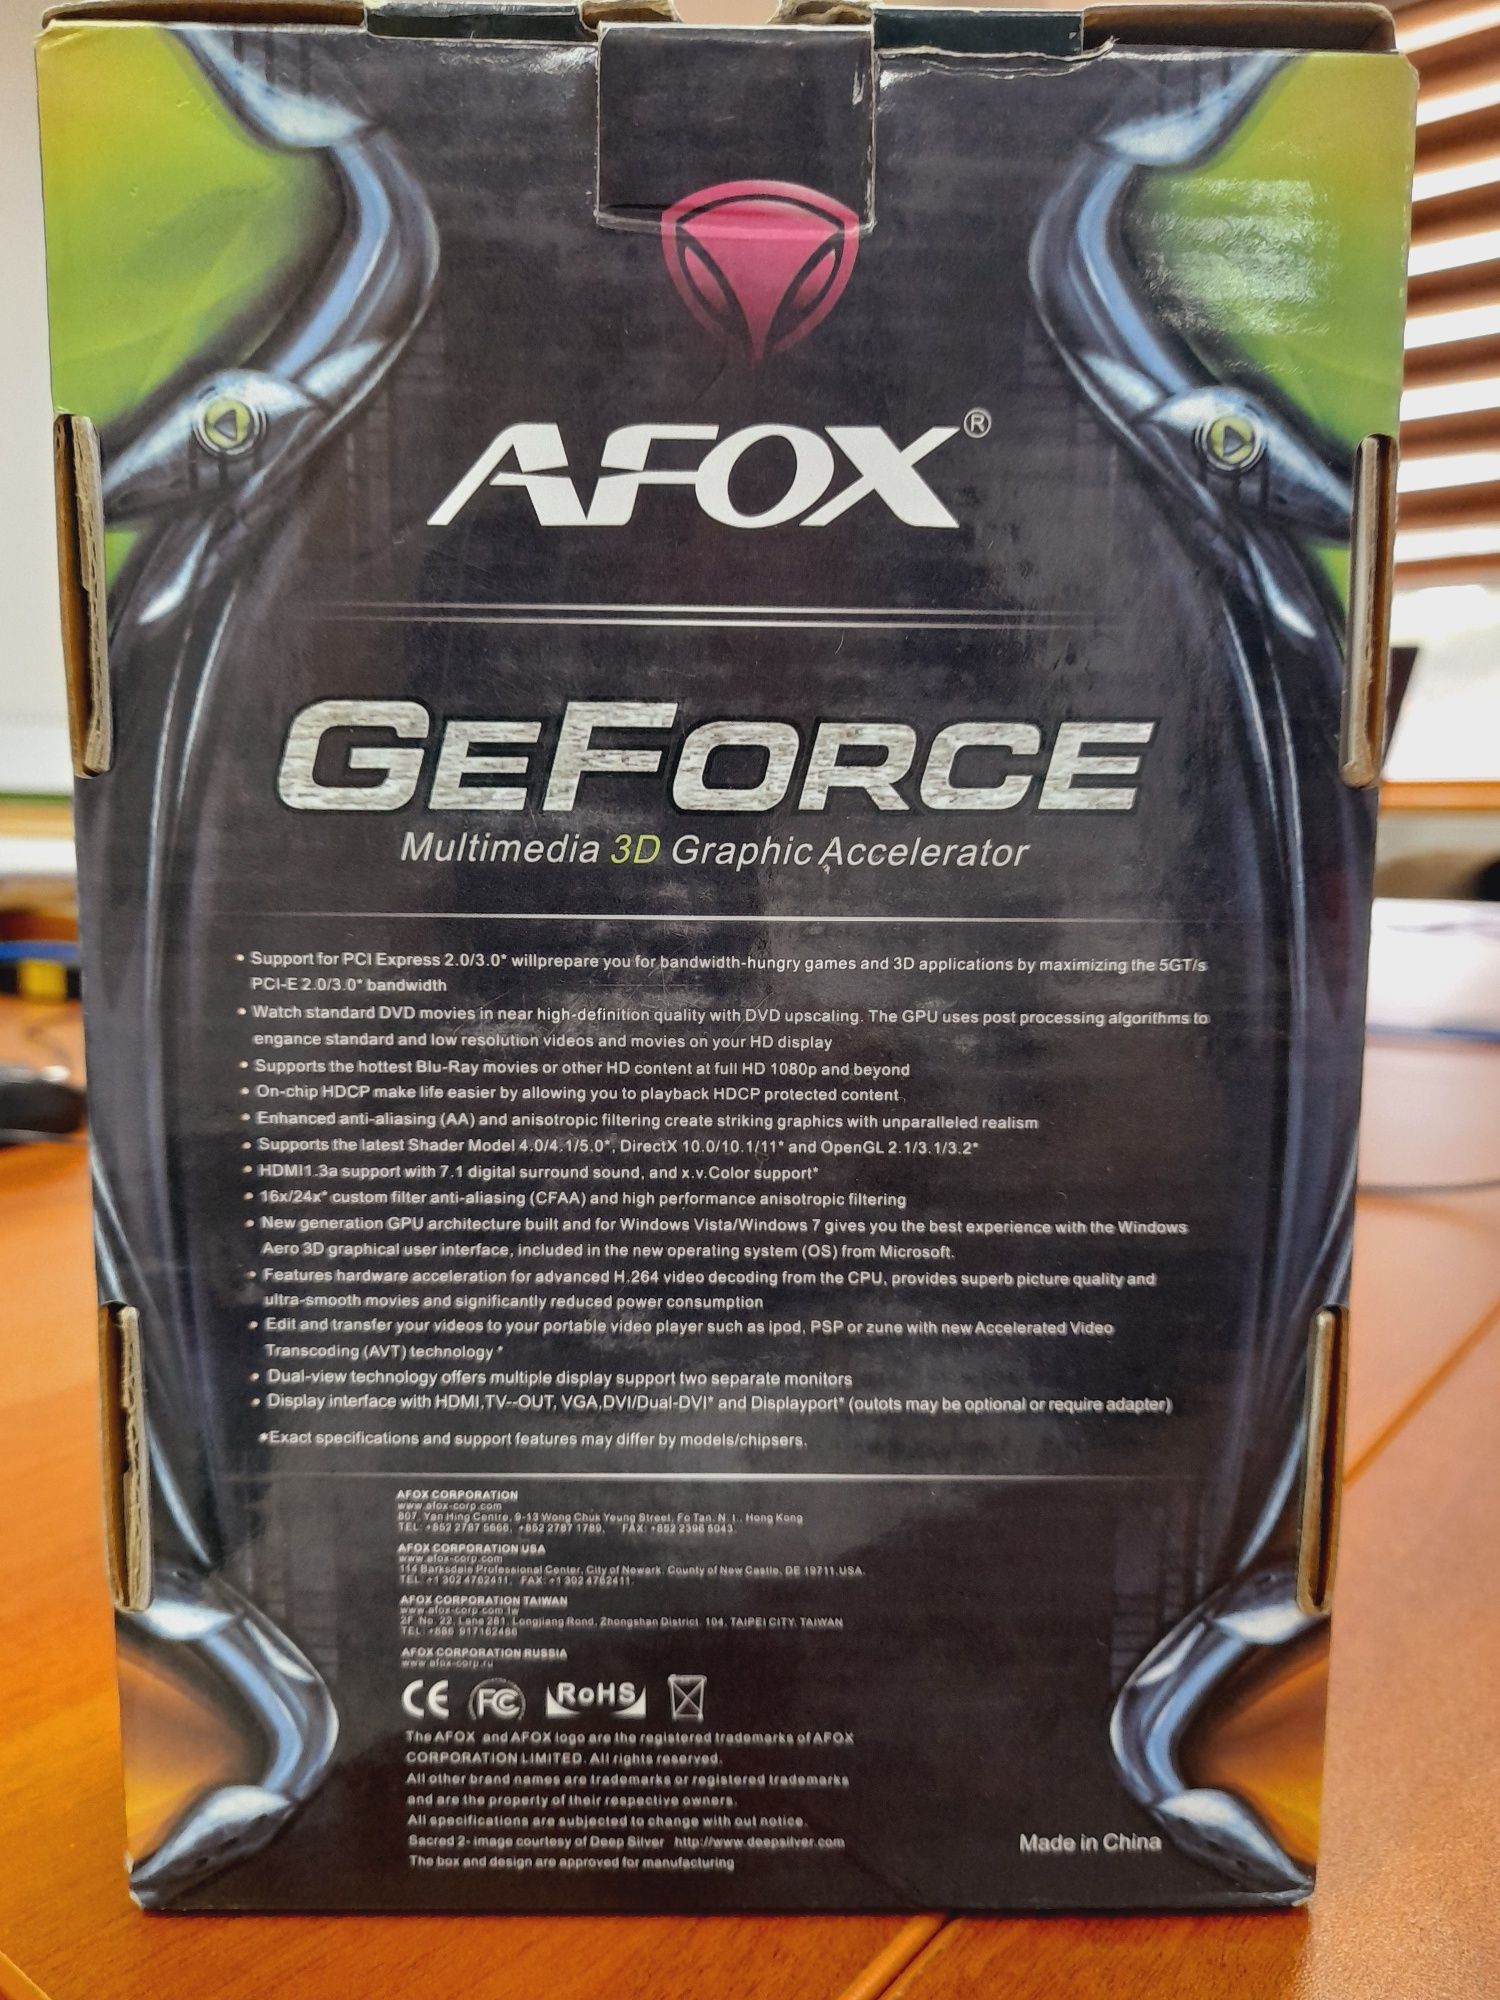 AFOX Geforce Series